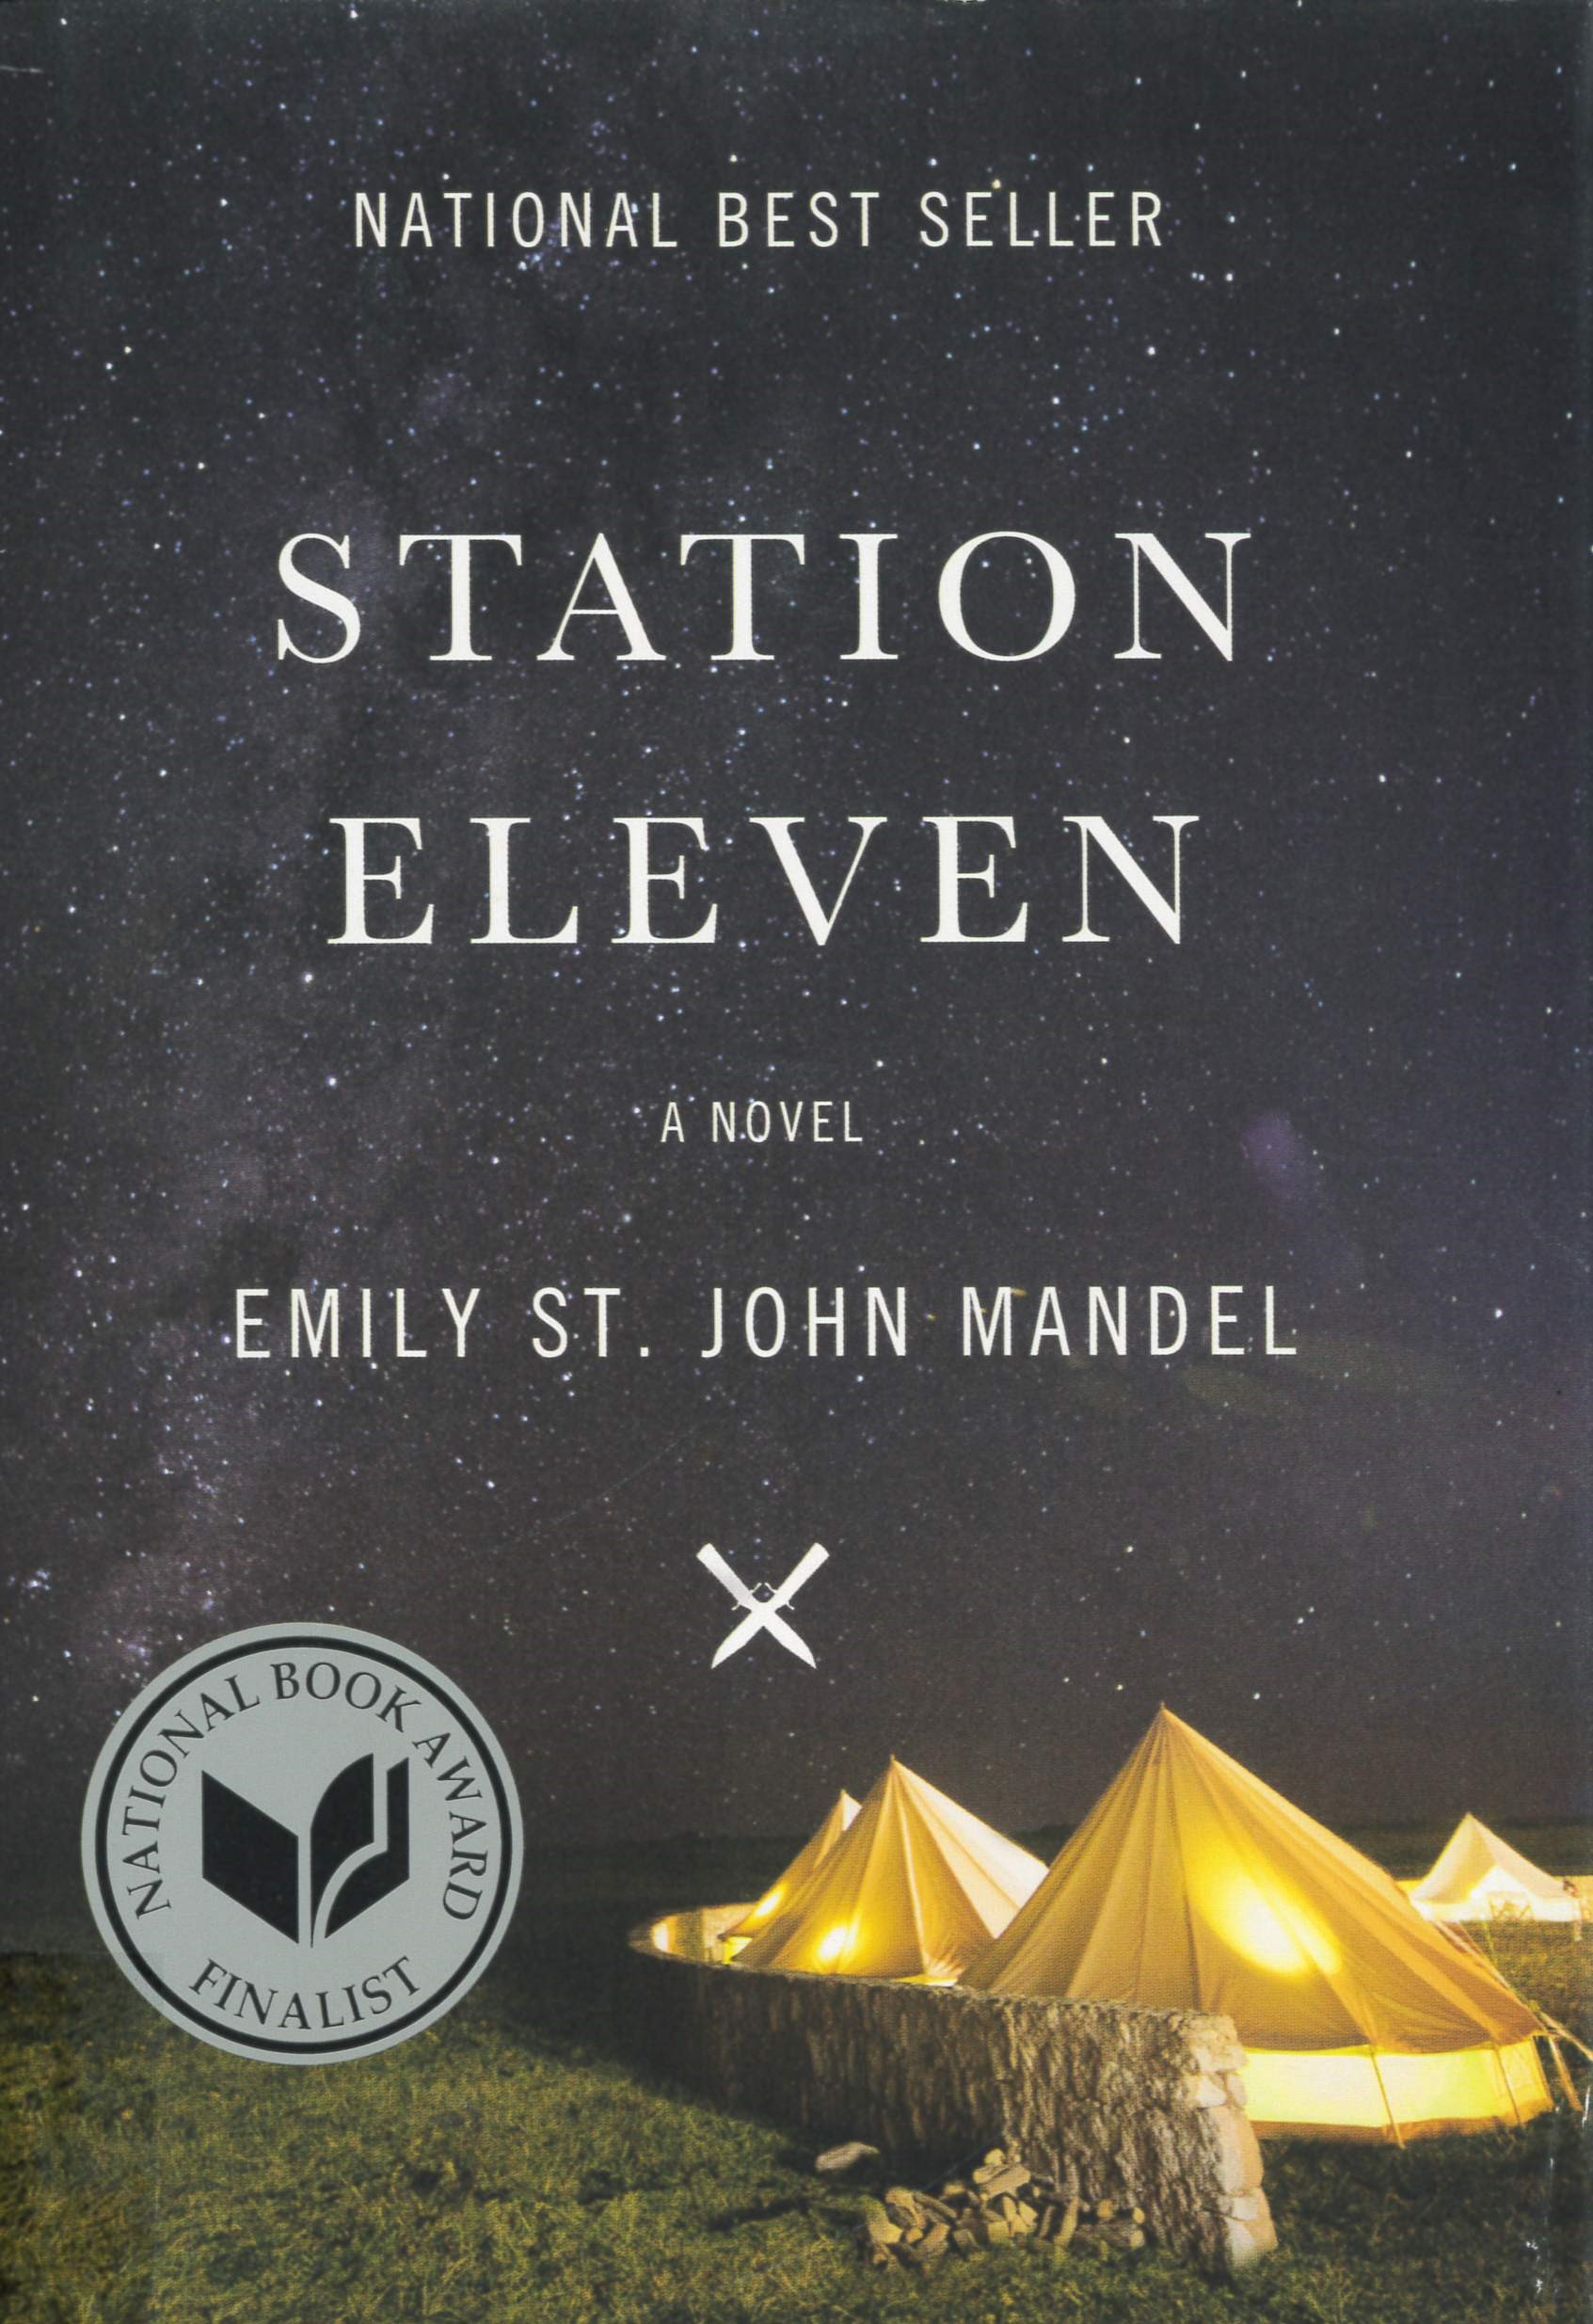 Station eleven : a novel /